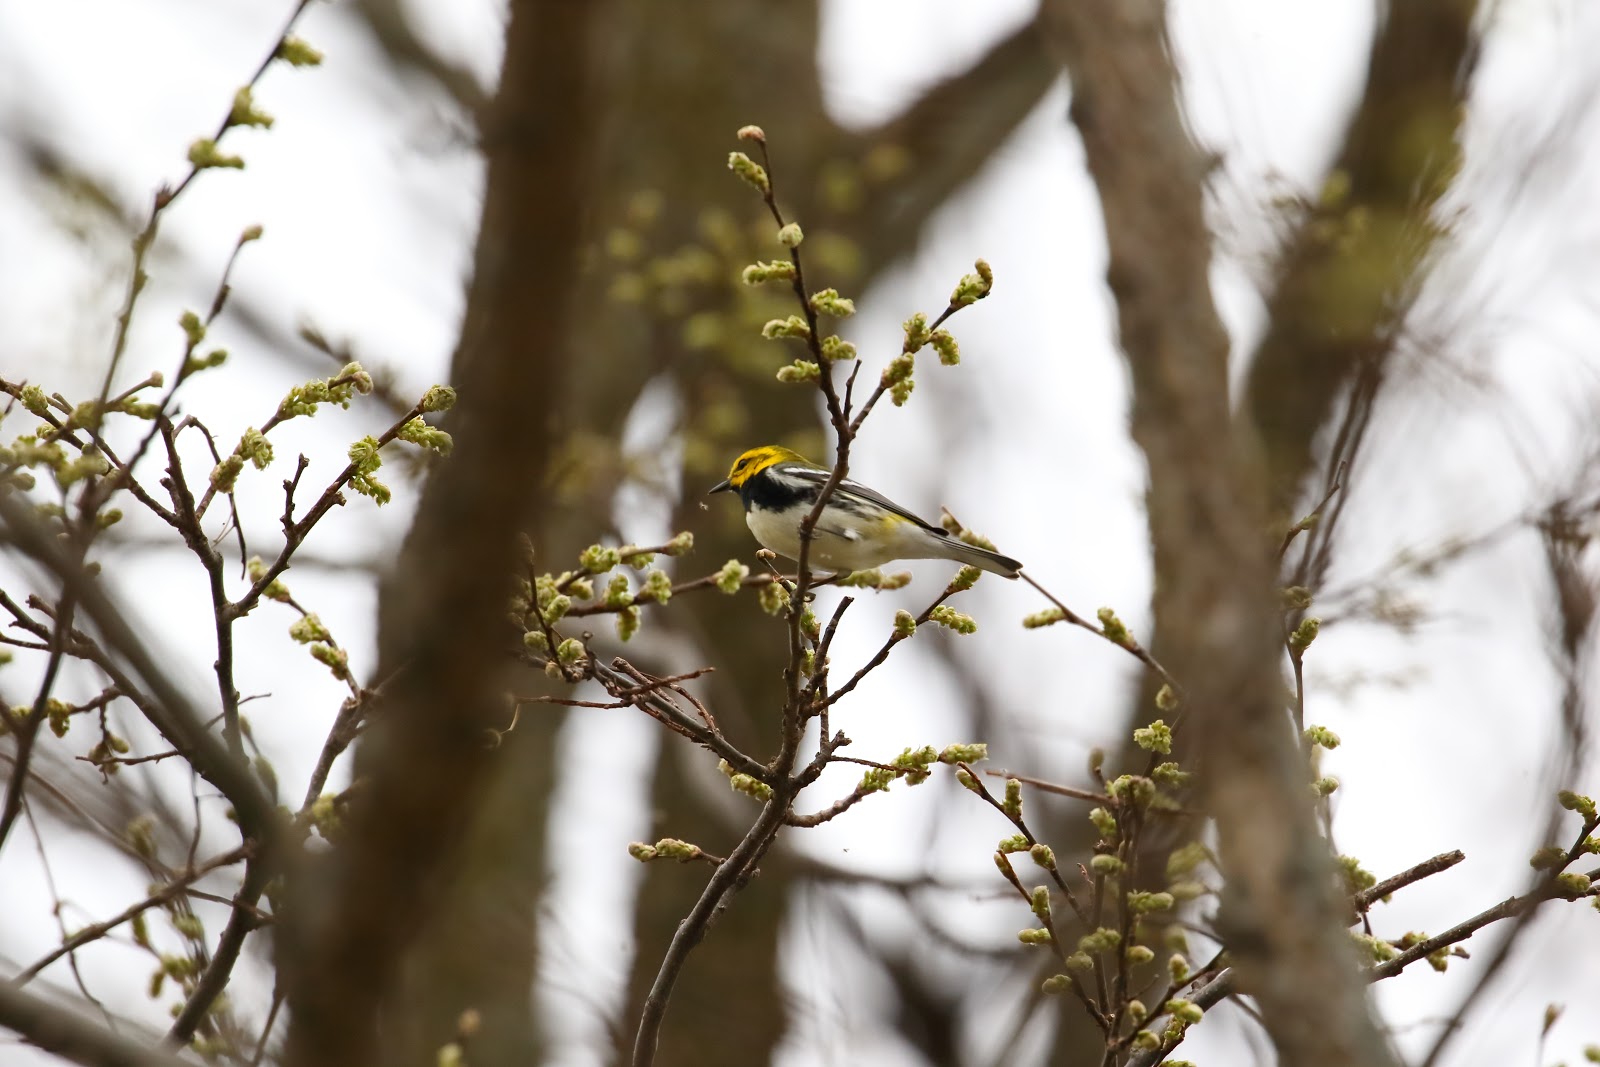 Black-Throated Green-Warbler image - click on image for sound